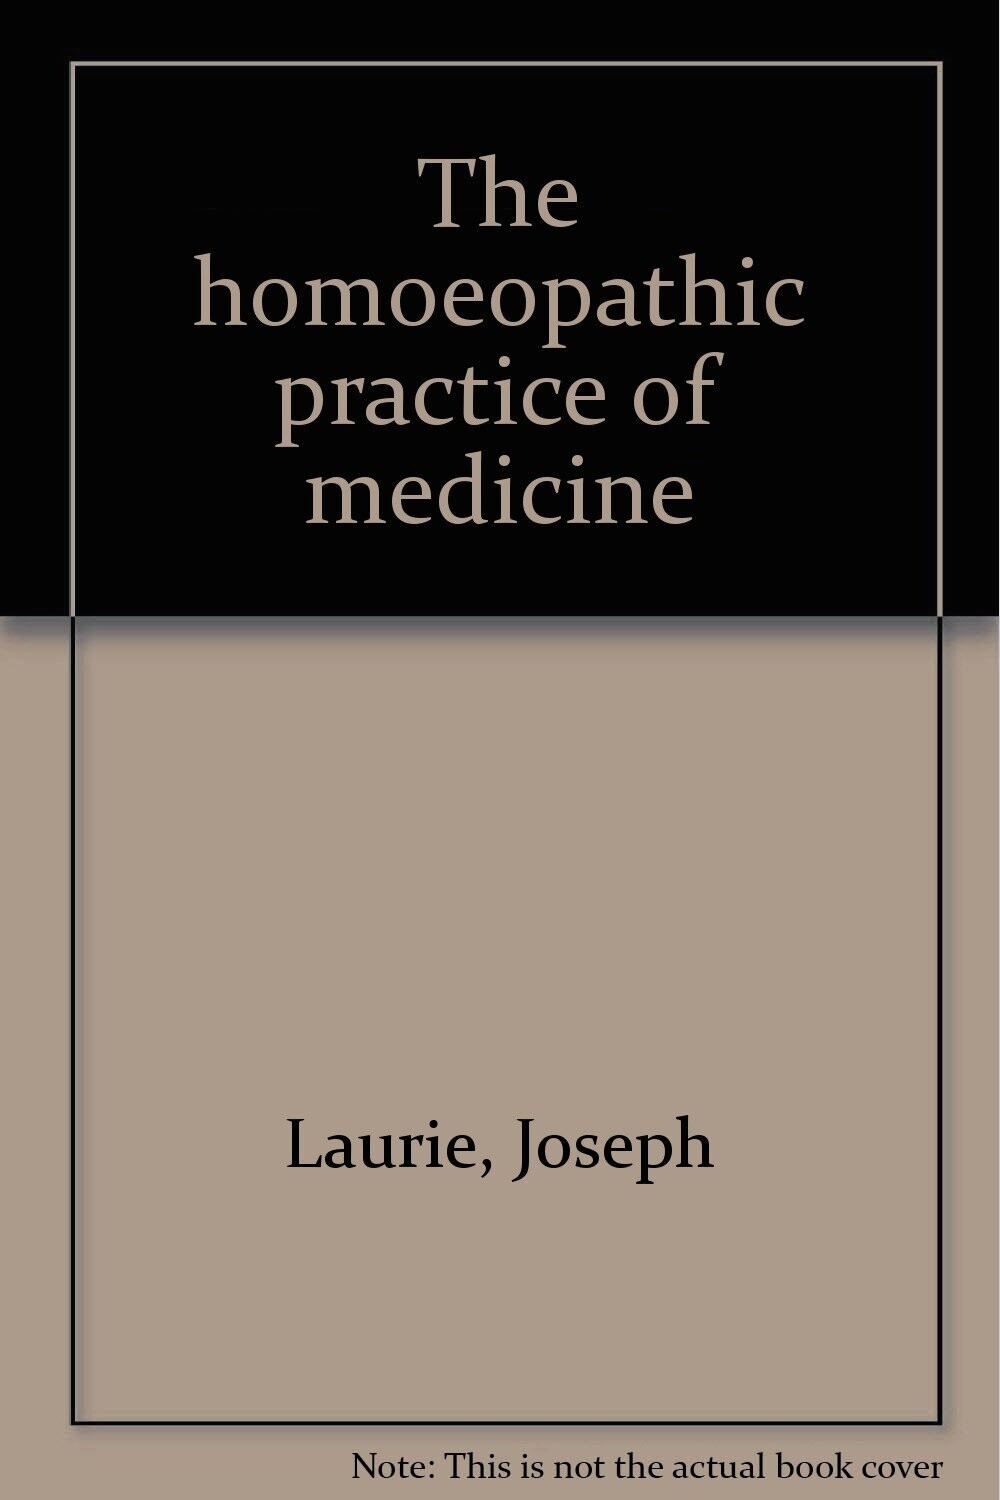 Practice of medicine* (Laurie)